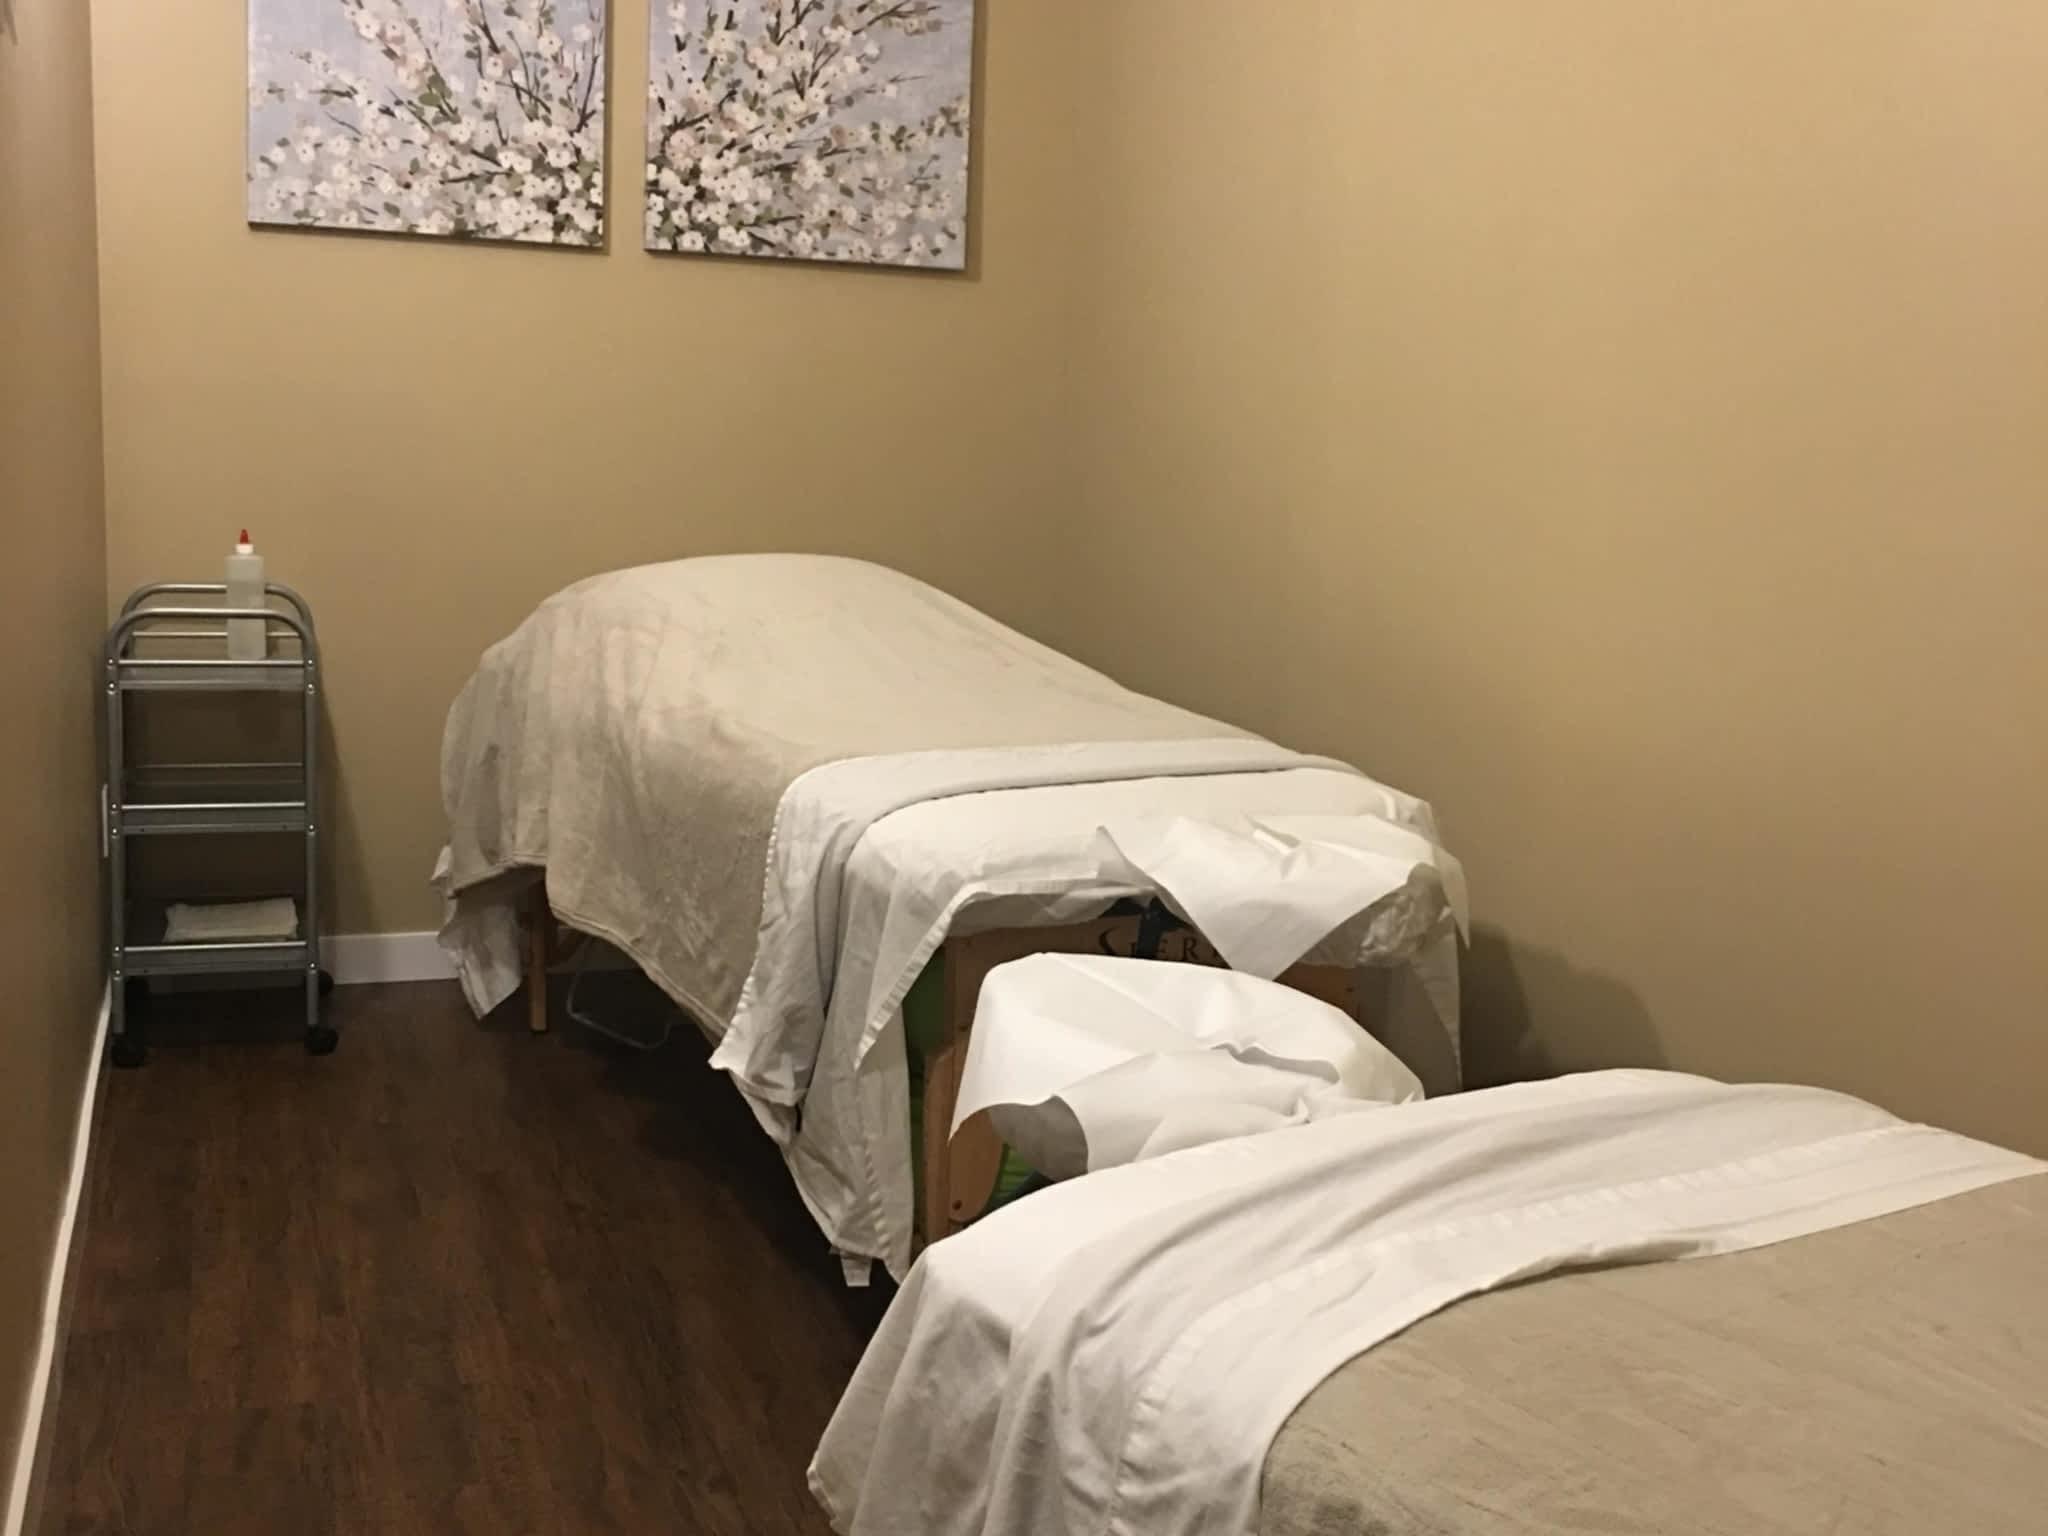 photo Body Balanced Massage Therapy Inc